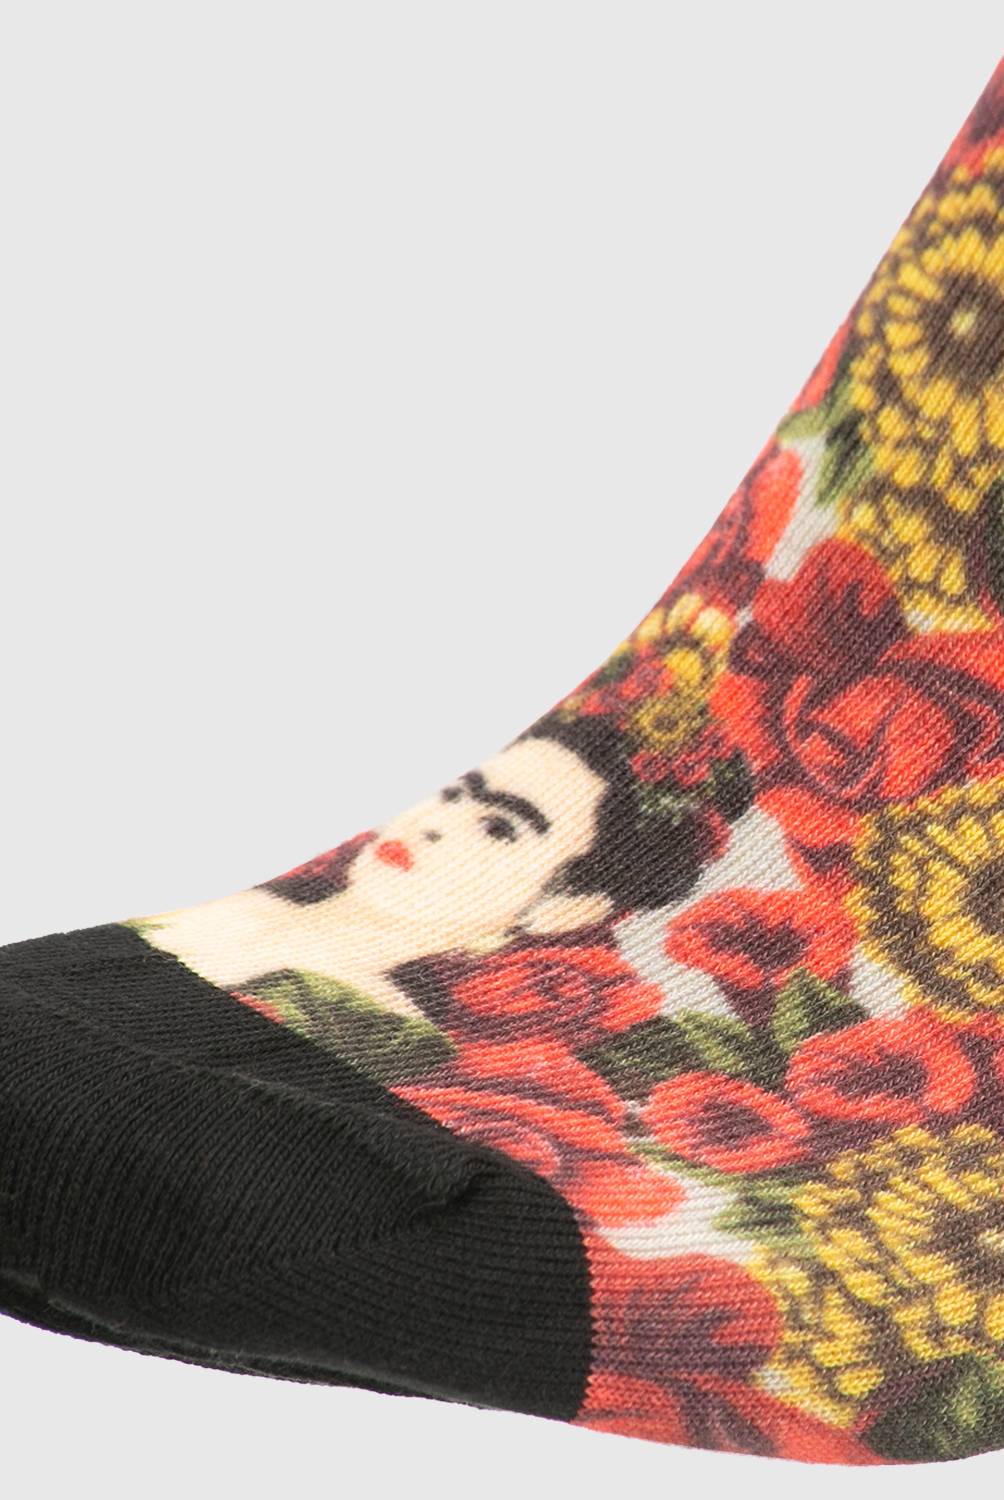 CALZEDONIA - Calcetines Cortos Frida Kahlo